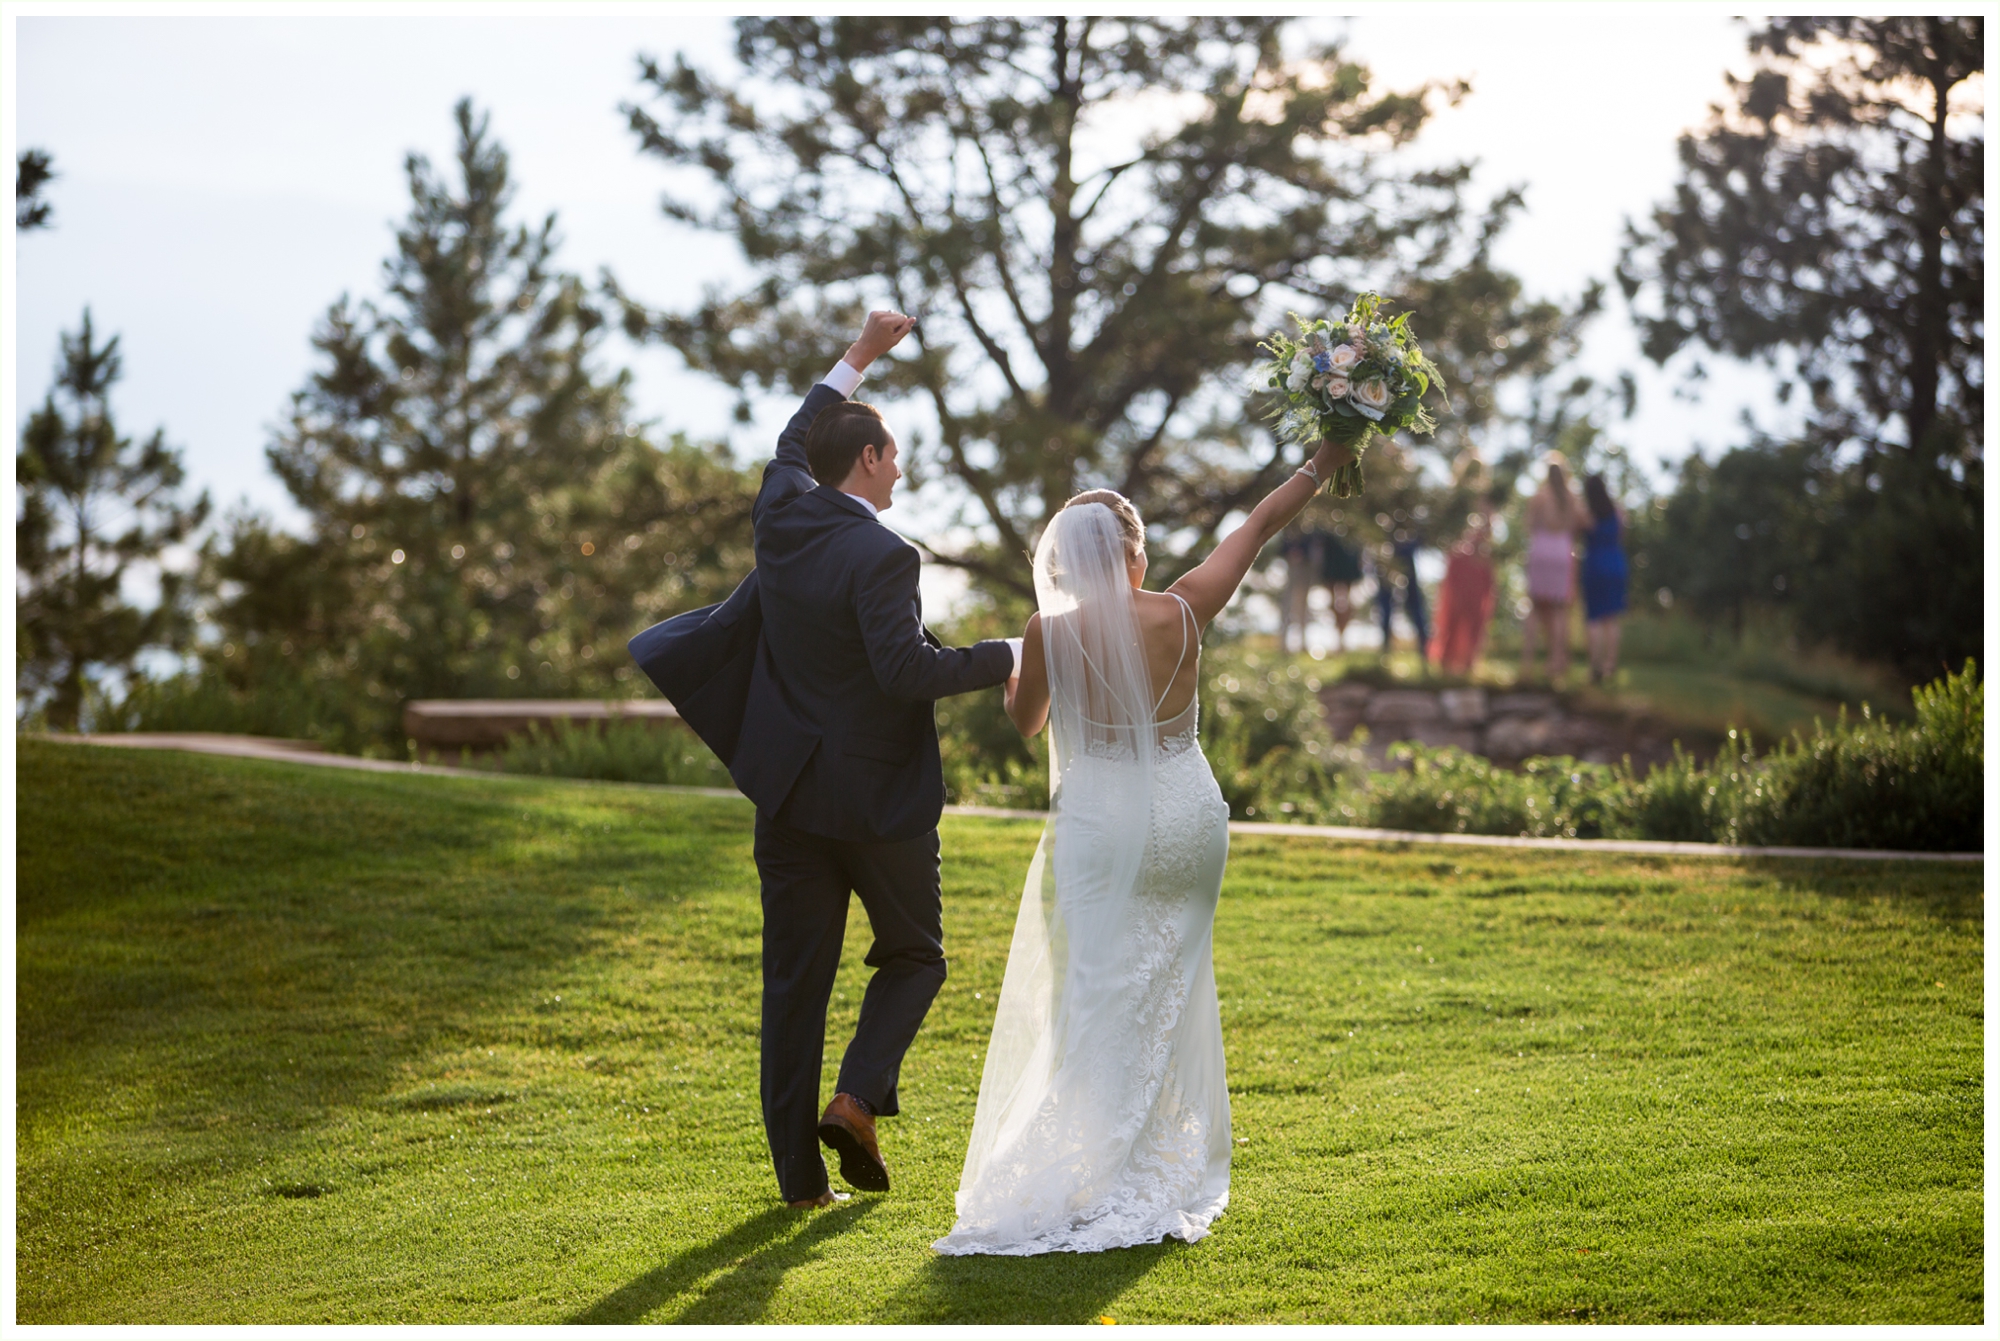 bride and groom candid outdoor portraits after sanctuary golf course wedding ceremony in colorado